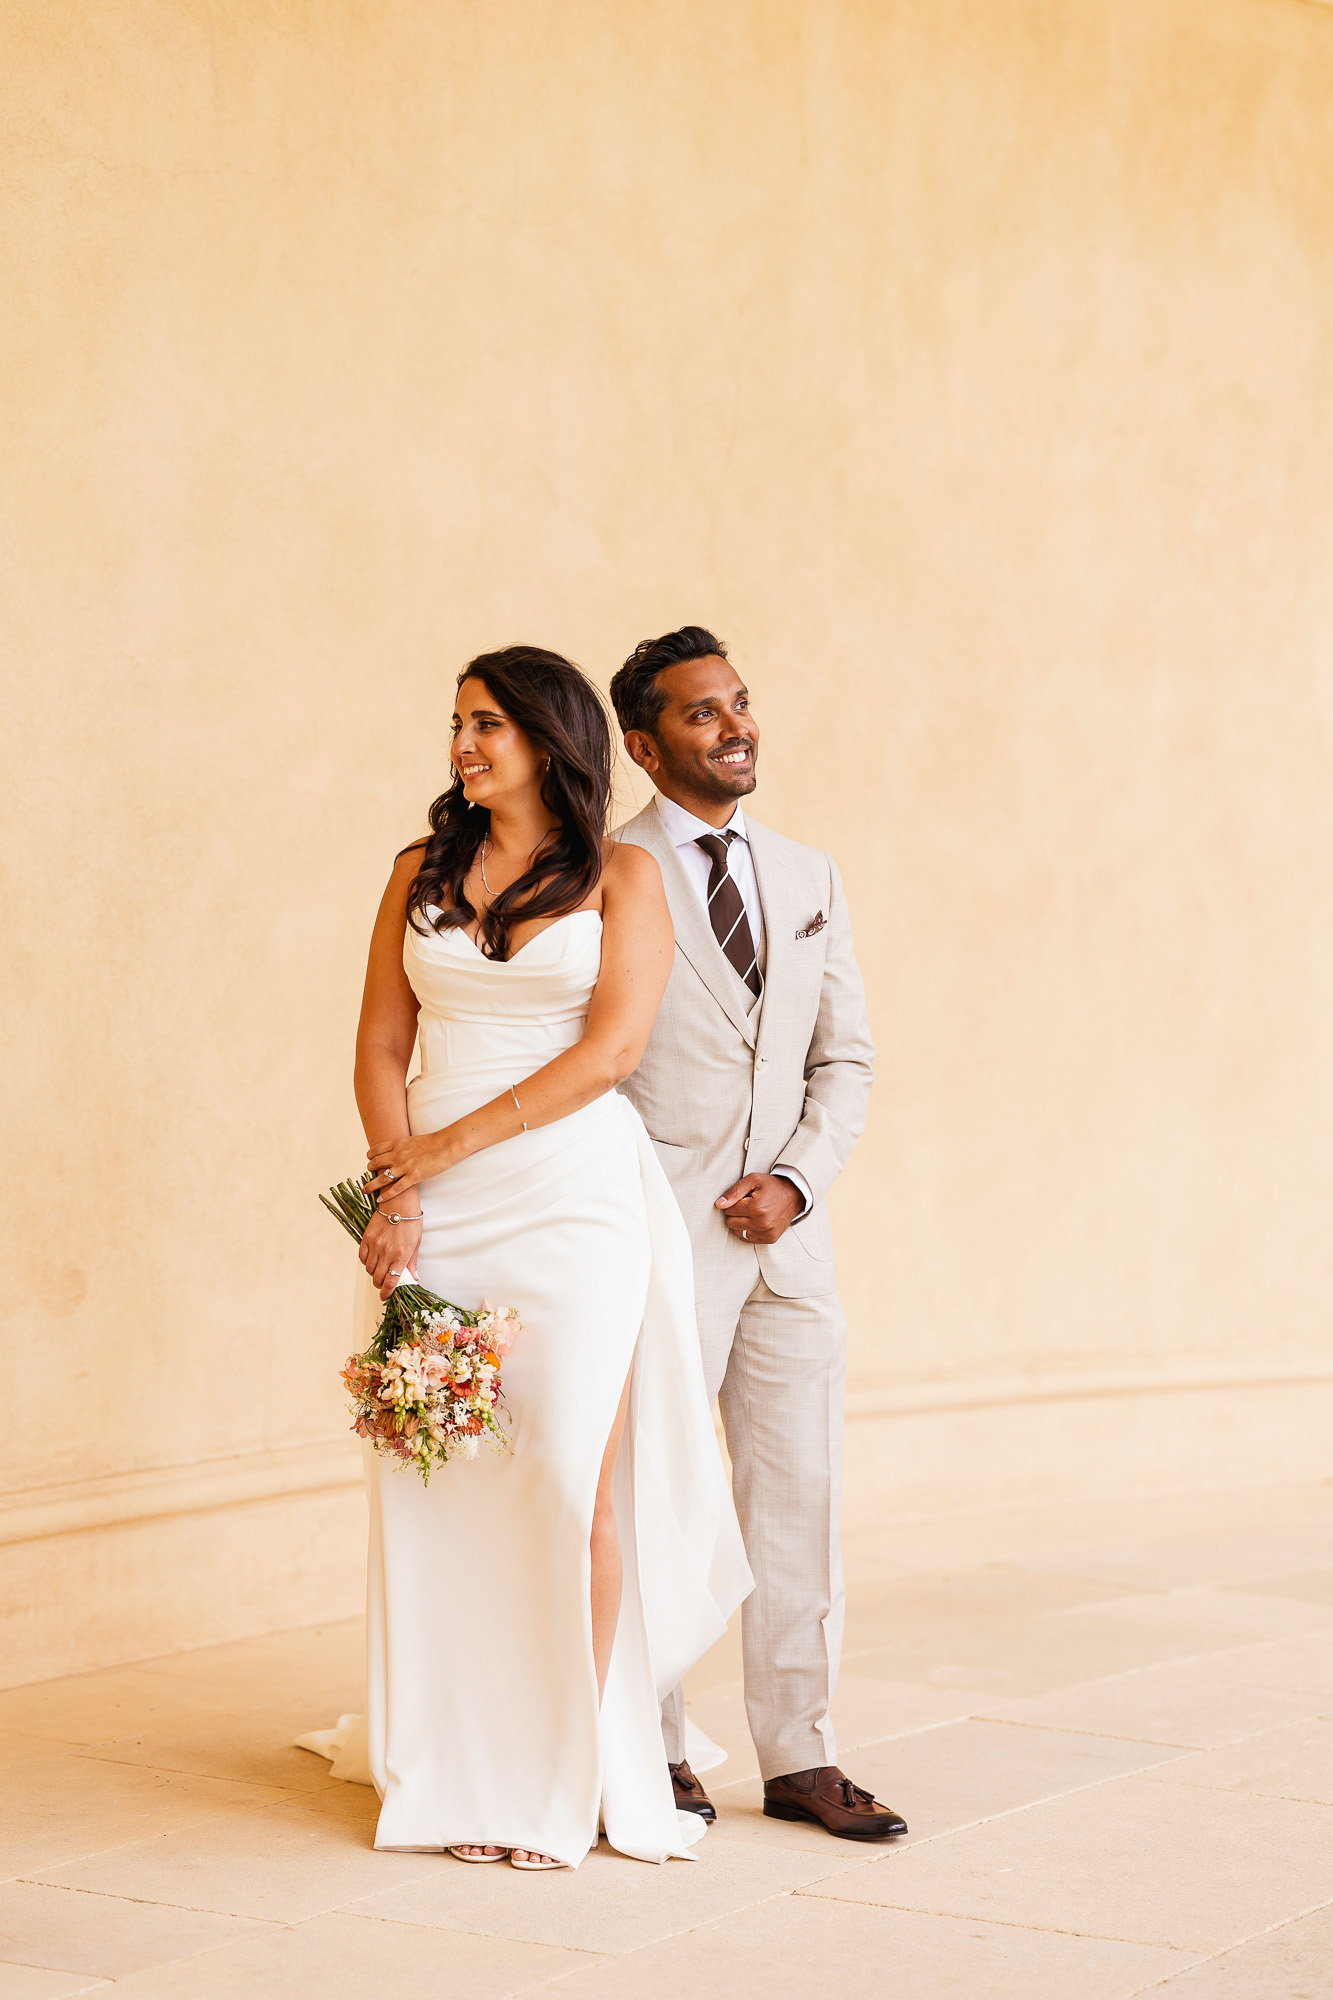 Stowe House, Civil Ceremony, Hindu Wedding, Multicultural Wedding Photographer, editorial portraits